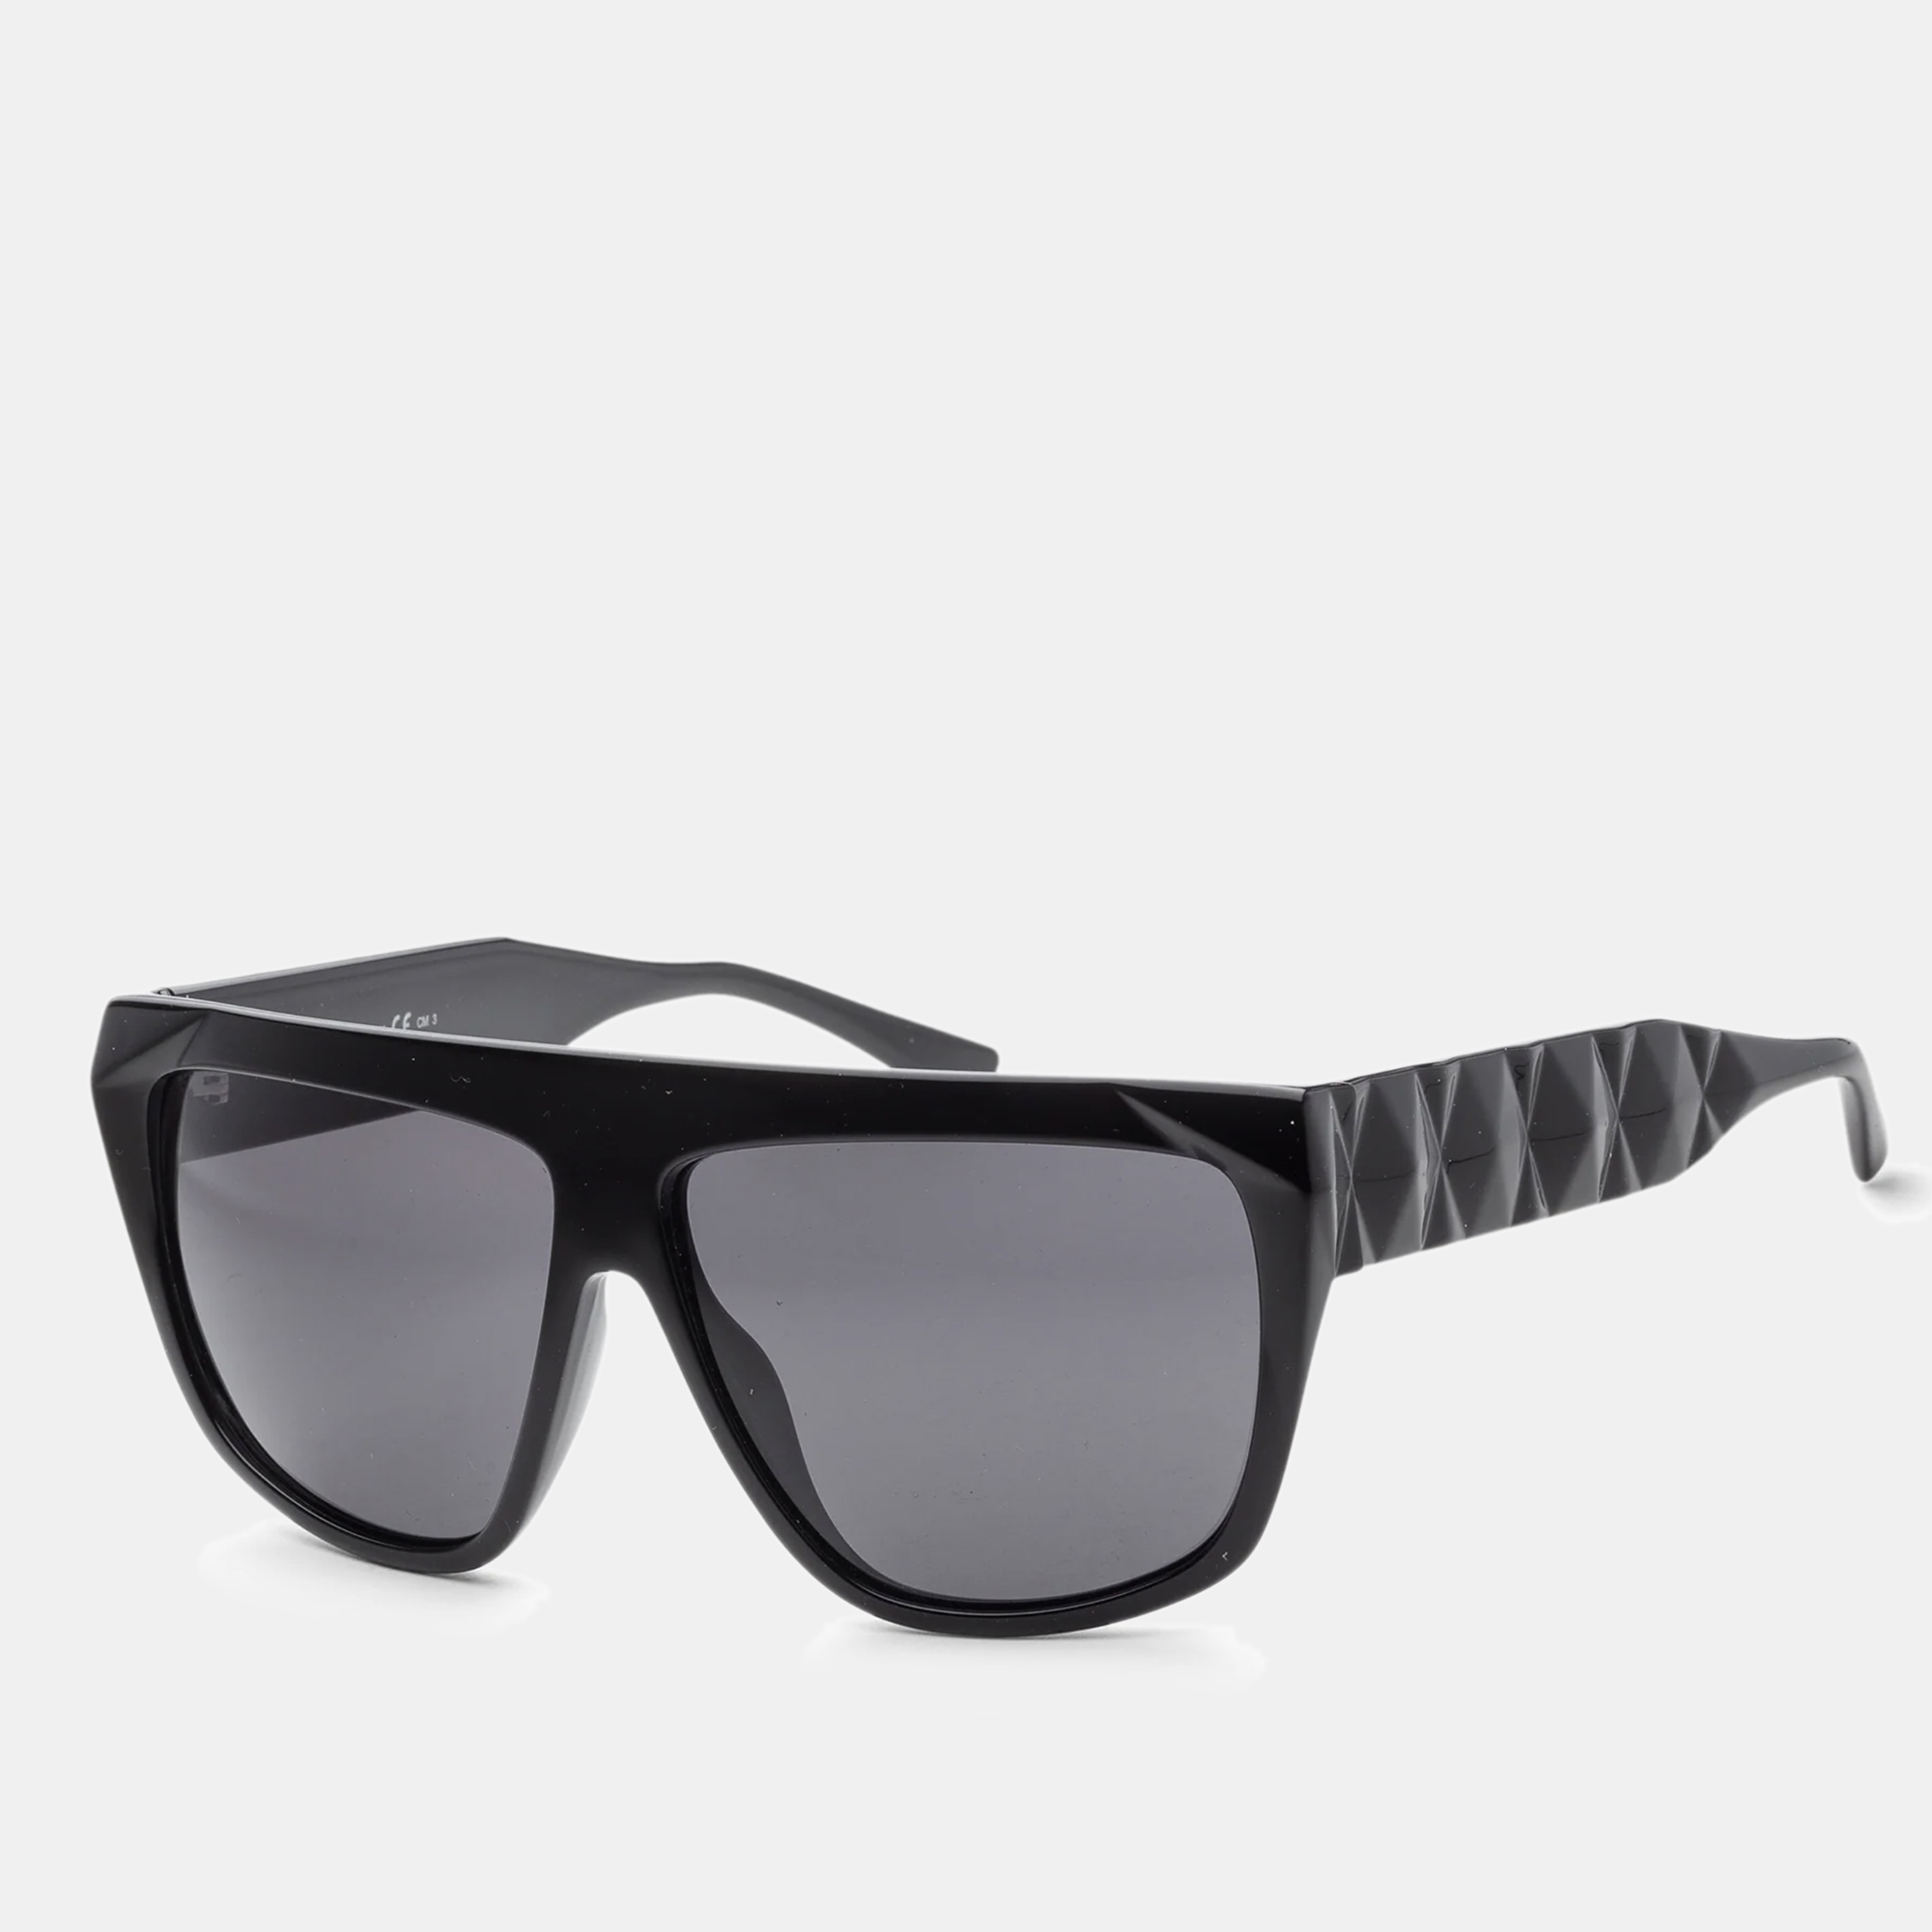 Pre-owned Jimmy Choo Black Duane Unisex Sunglasses 61mm